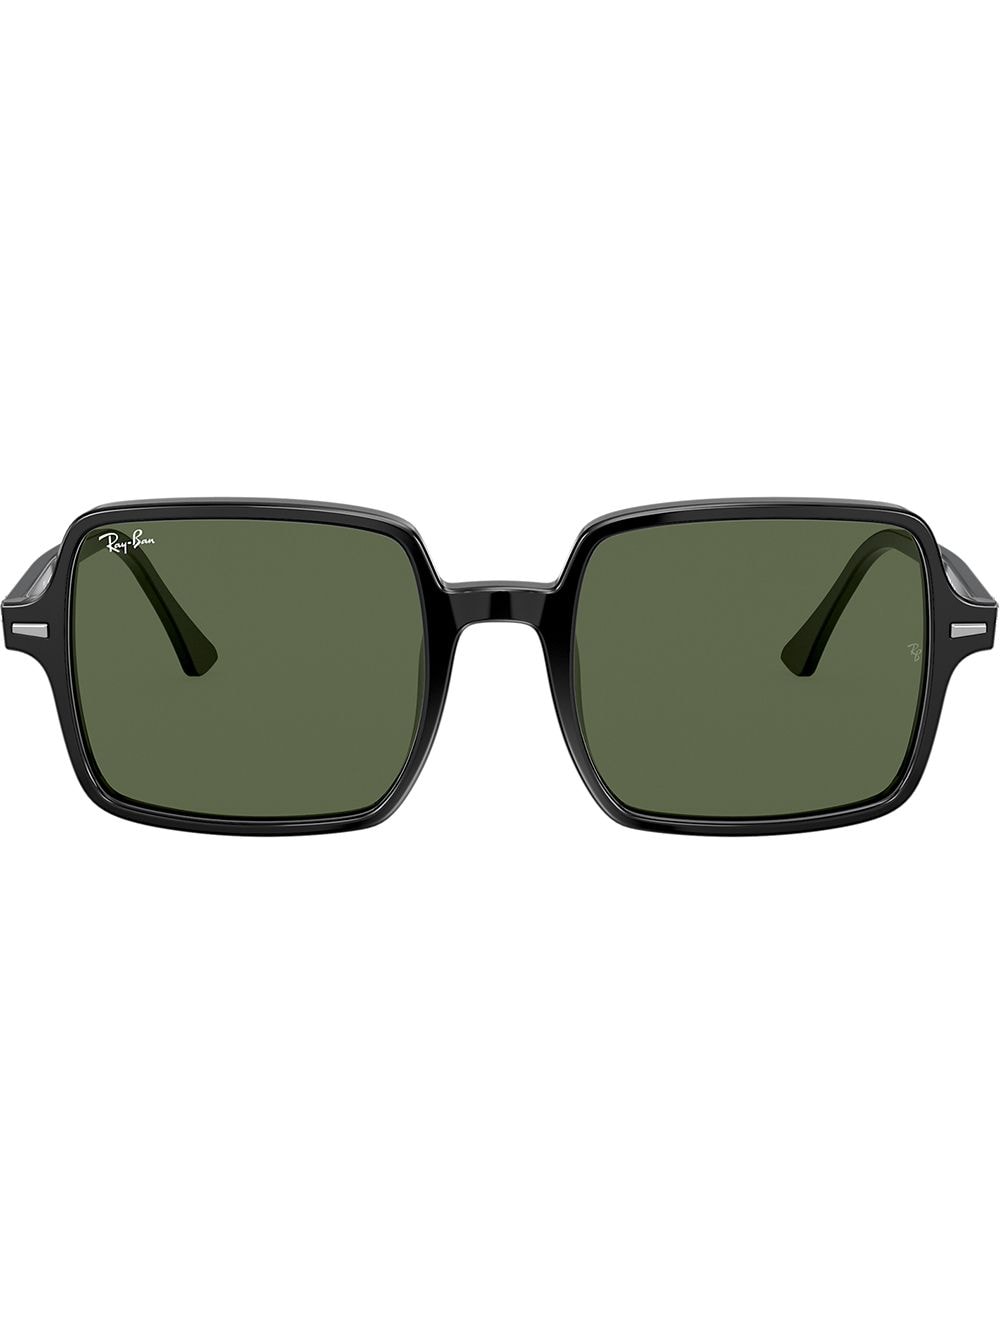 Image 1 of Ray-Ban oversized square sunglasses